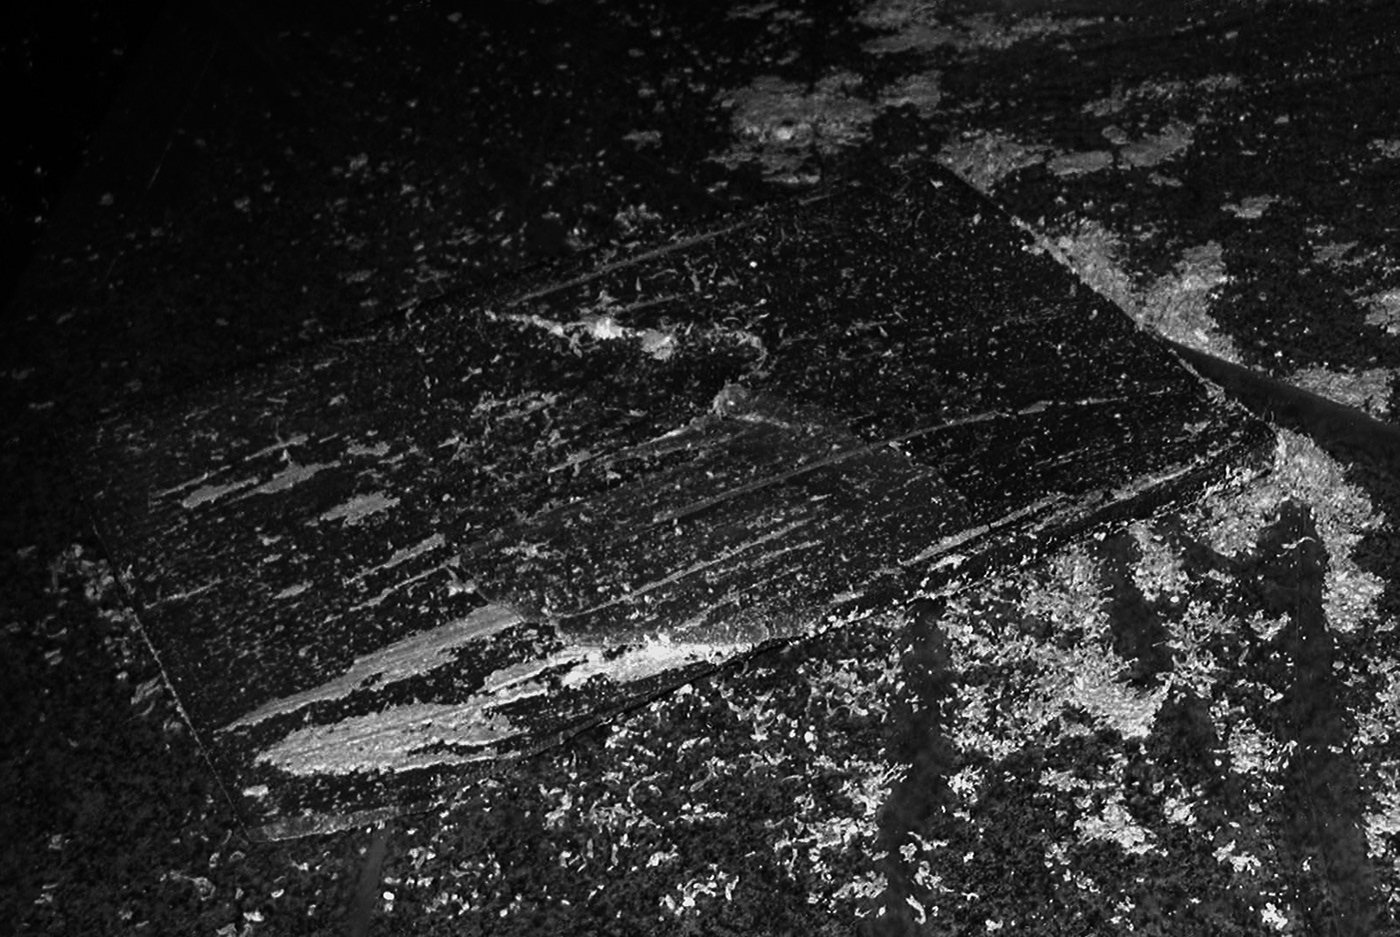 abstract ART IN NATURE bianco e nero blackandwhite blanci y negro leonard rachita monochrome noir et blanc trace traces